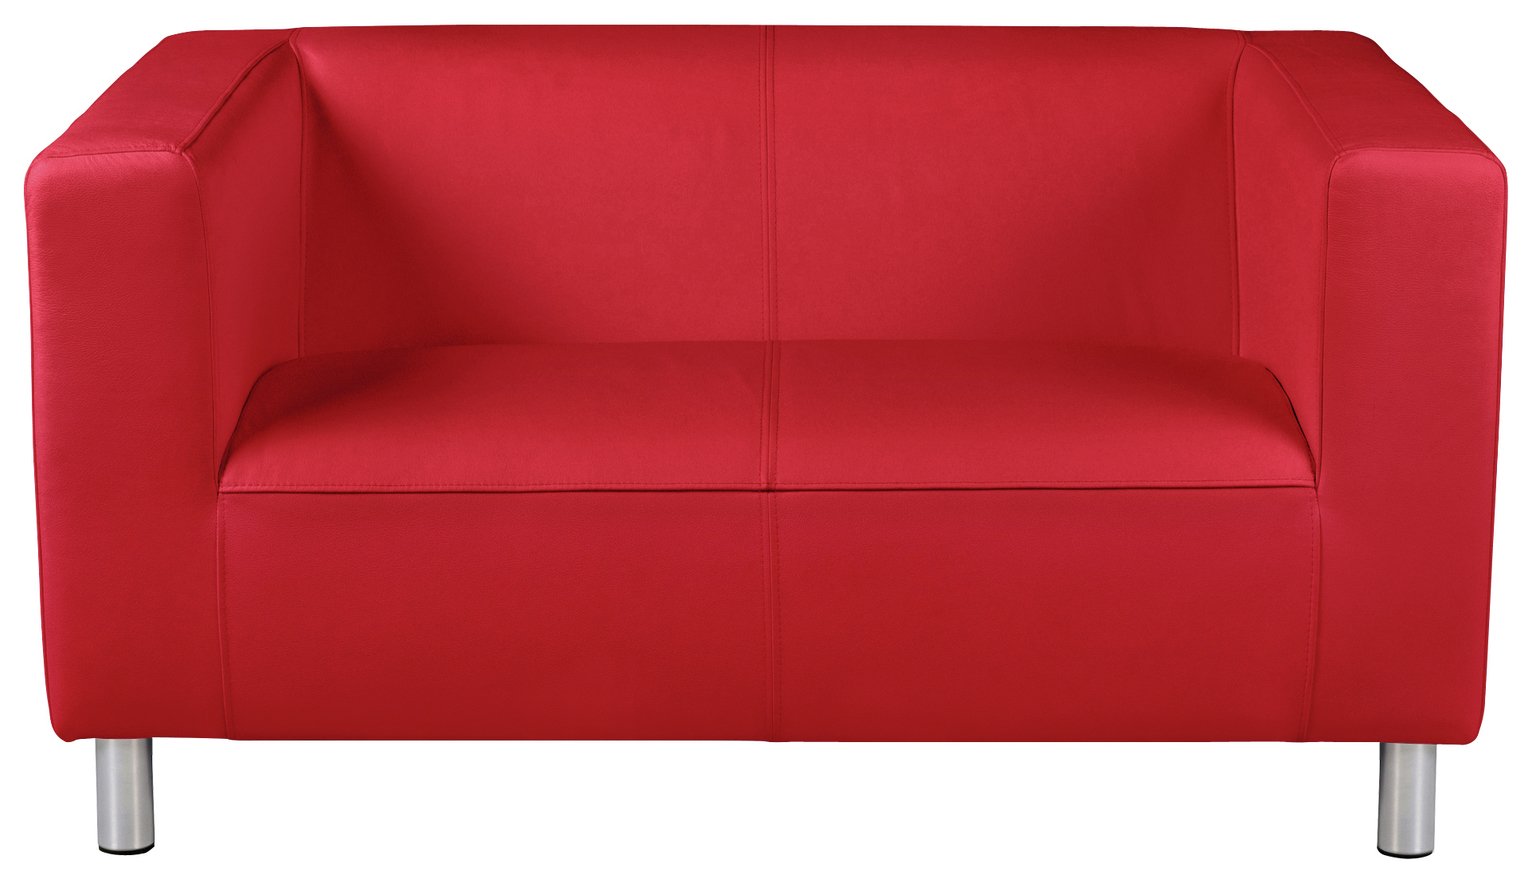 Argos Home Moda Compact 2 Seater Fabric Sofa - Red